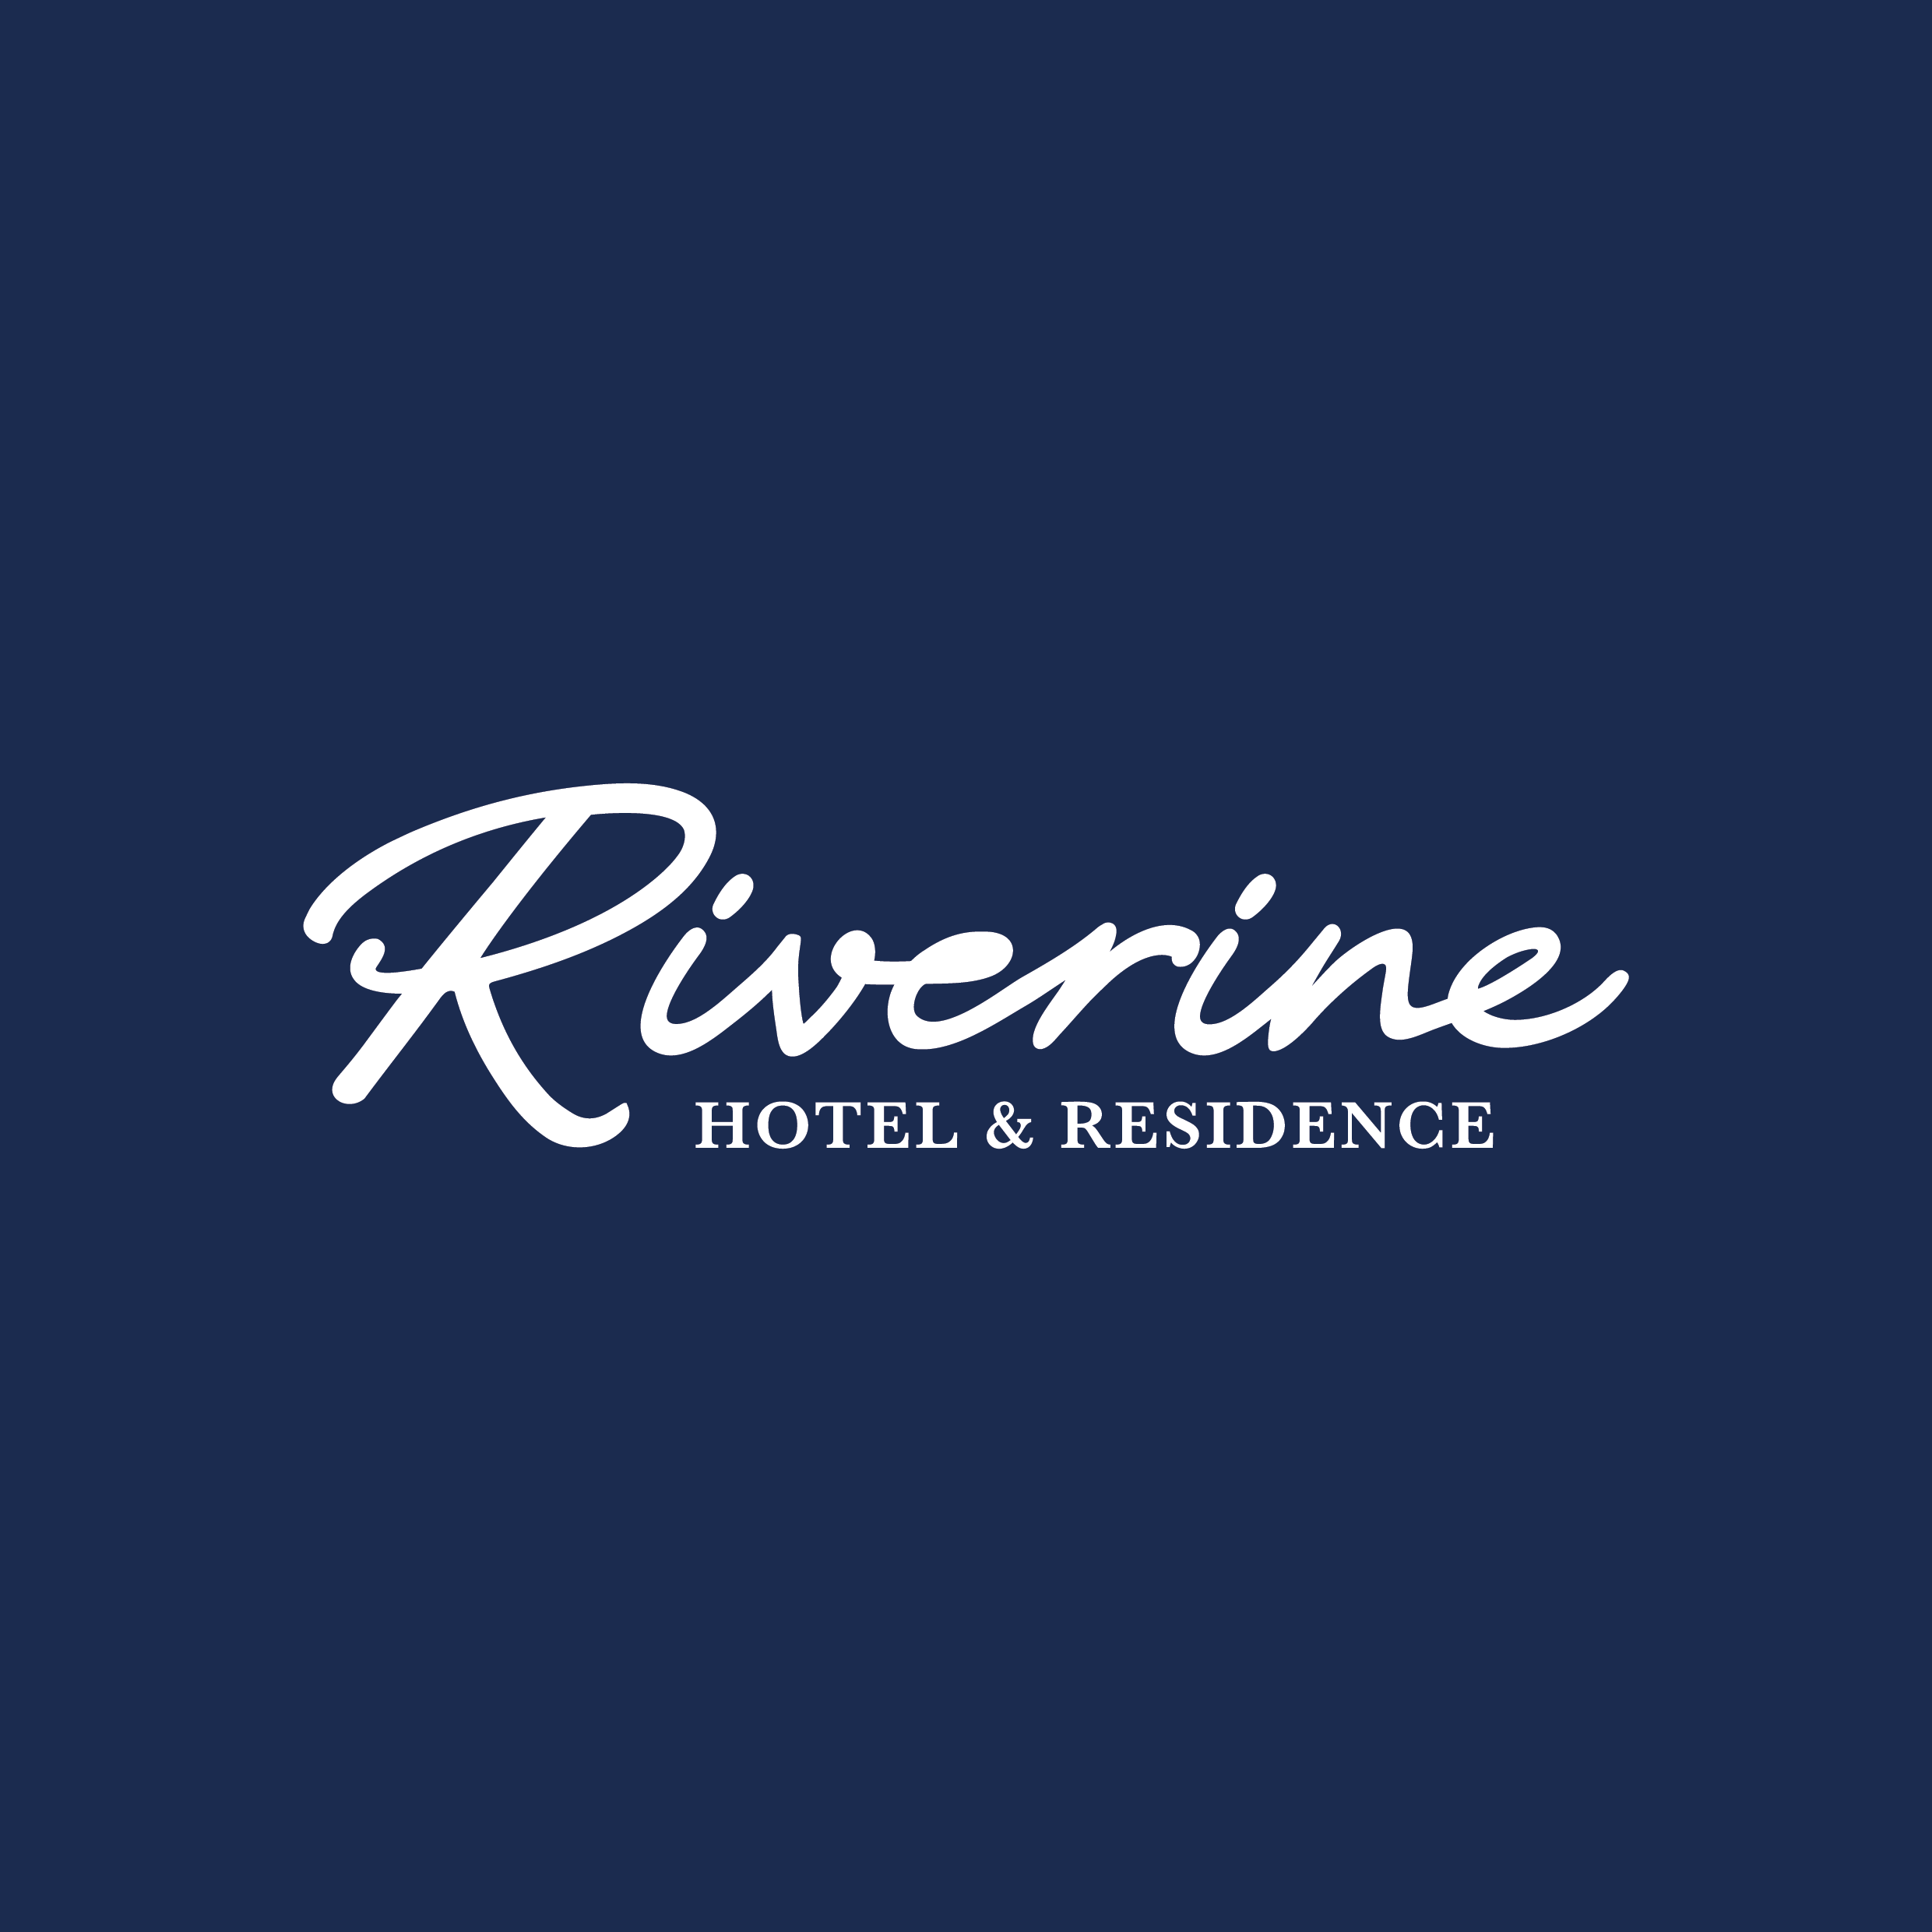 Riverine Hotel & Residence